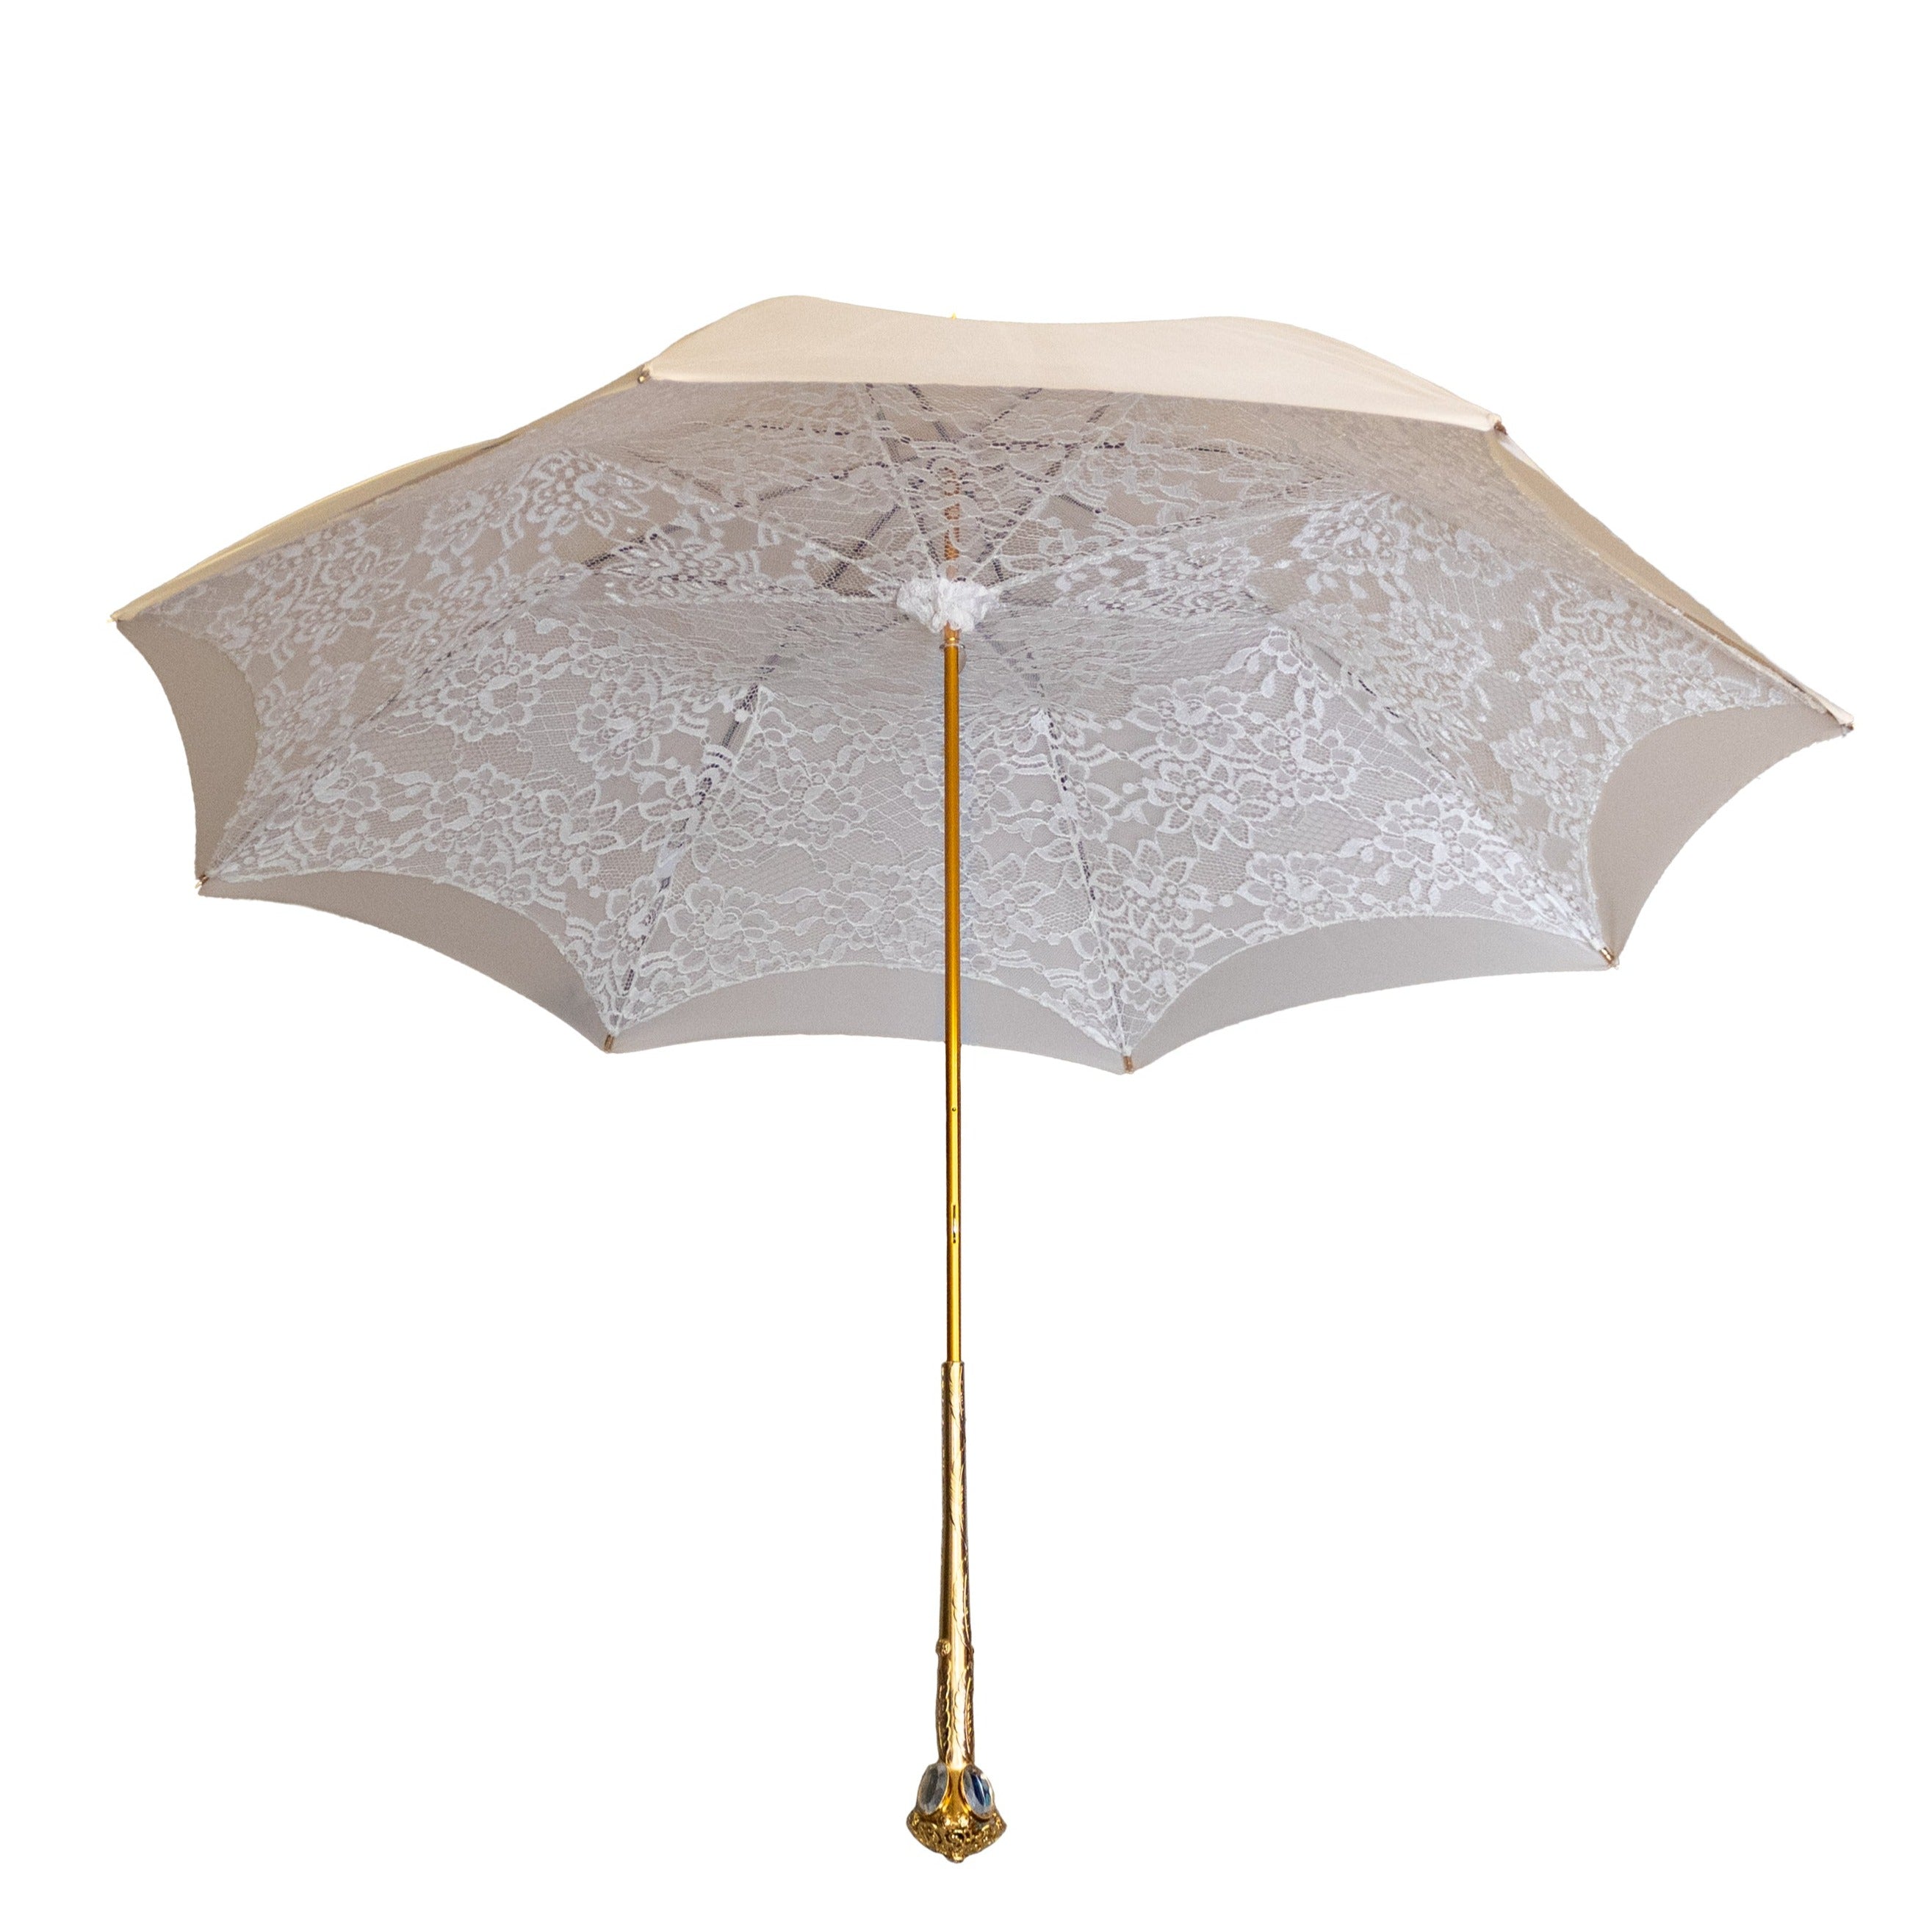 Pasotti Double Umbrella Ivory with White Lace - Decree Co. 